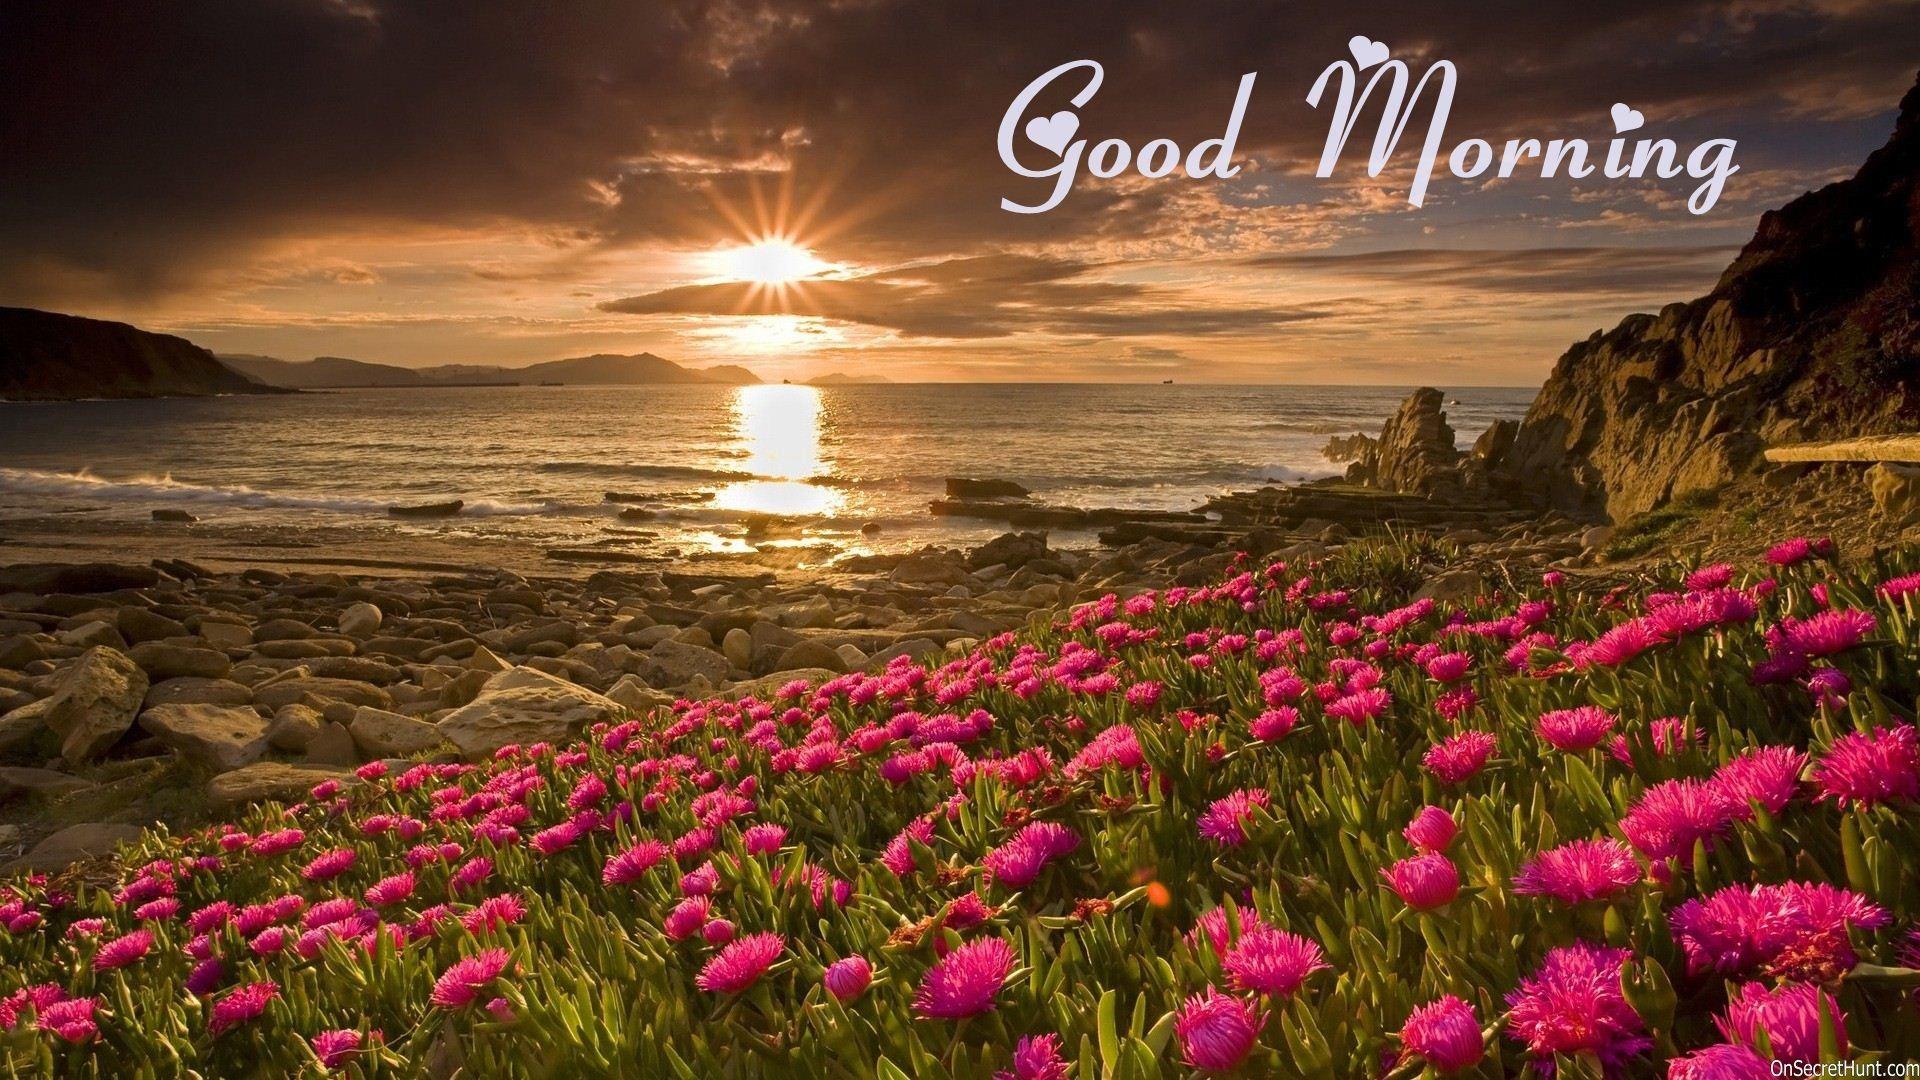 Beautiful Good Morning Wallpaper Image And Photo Free